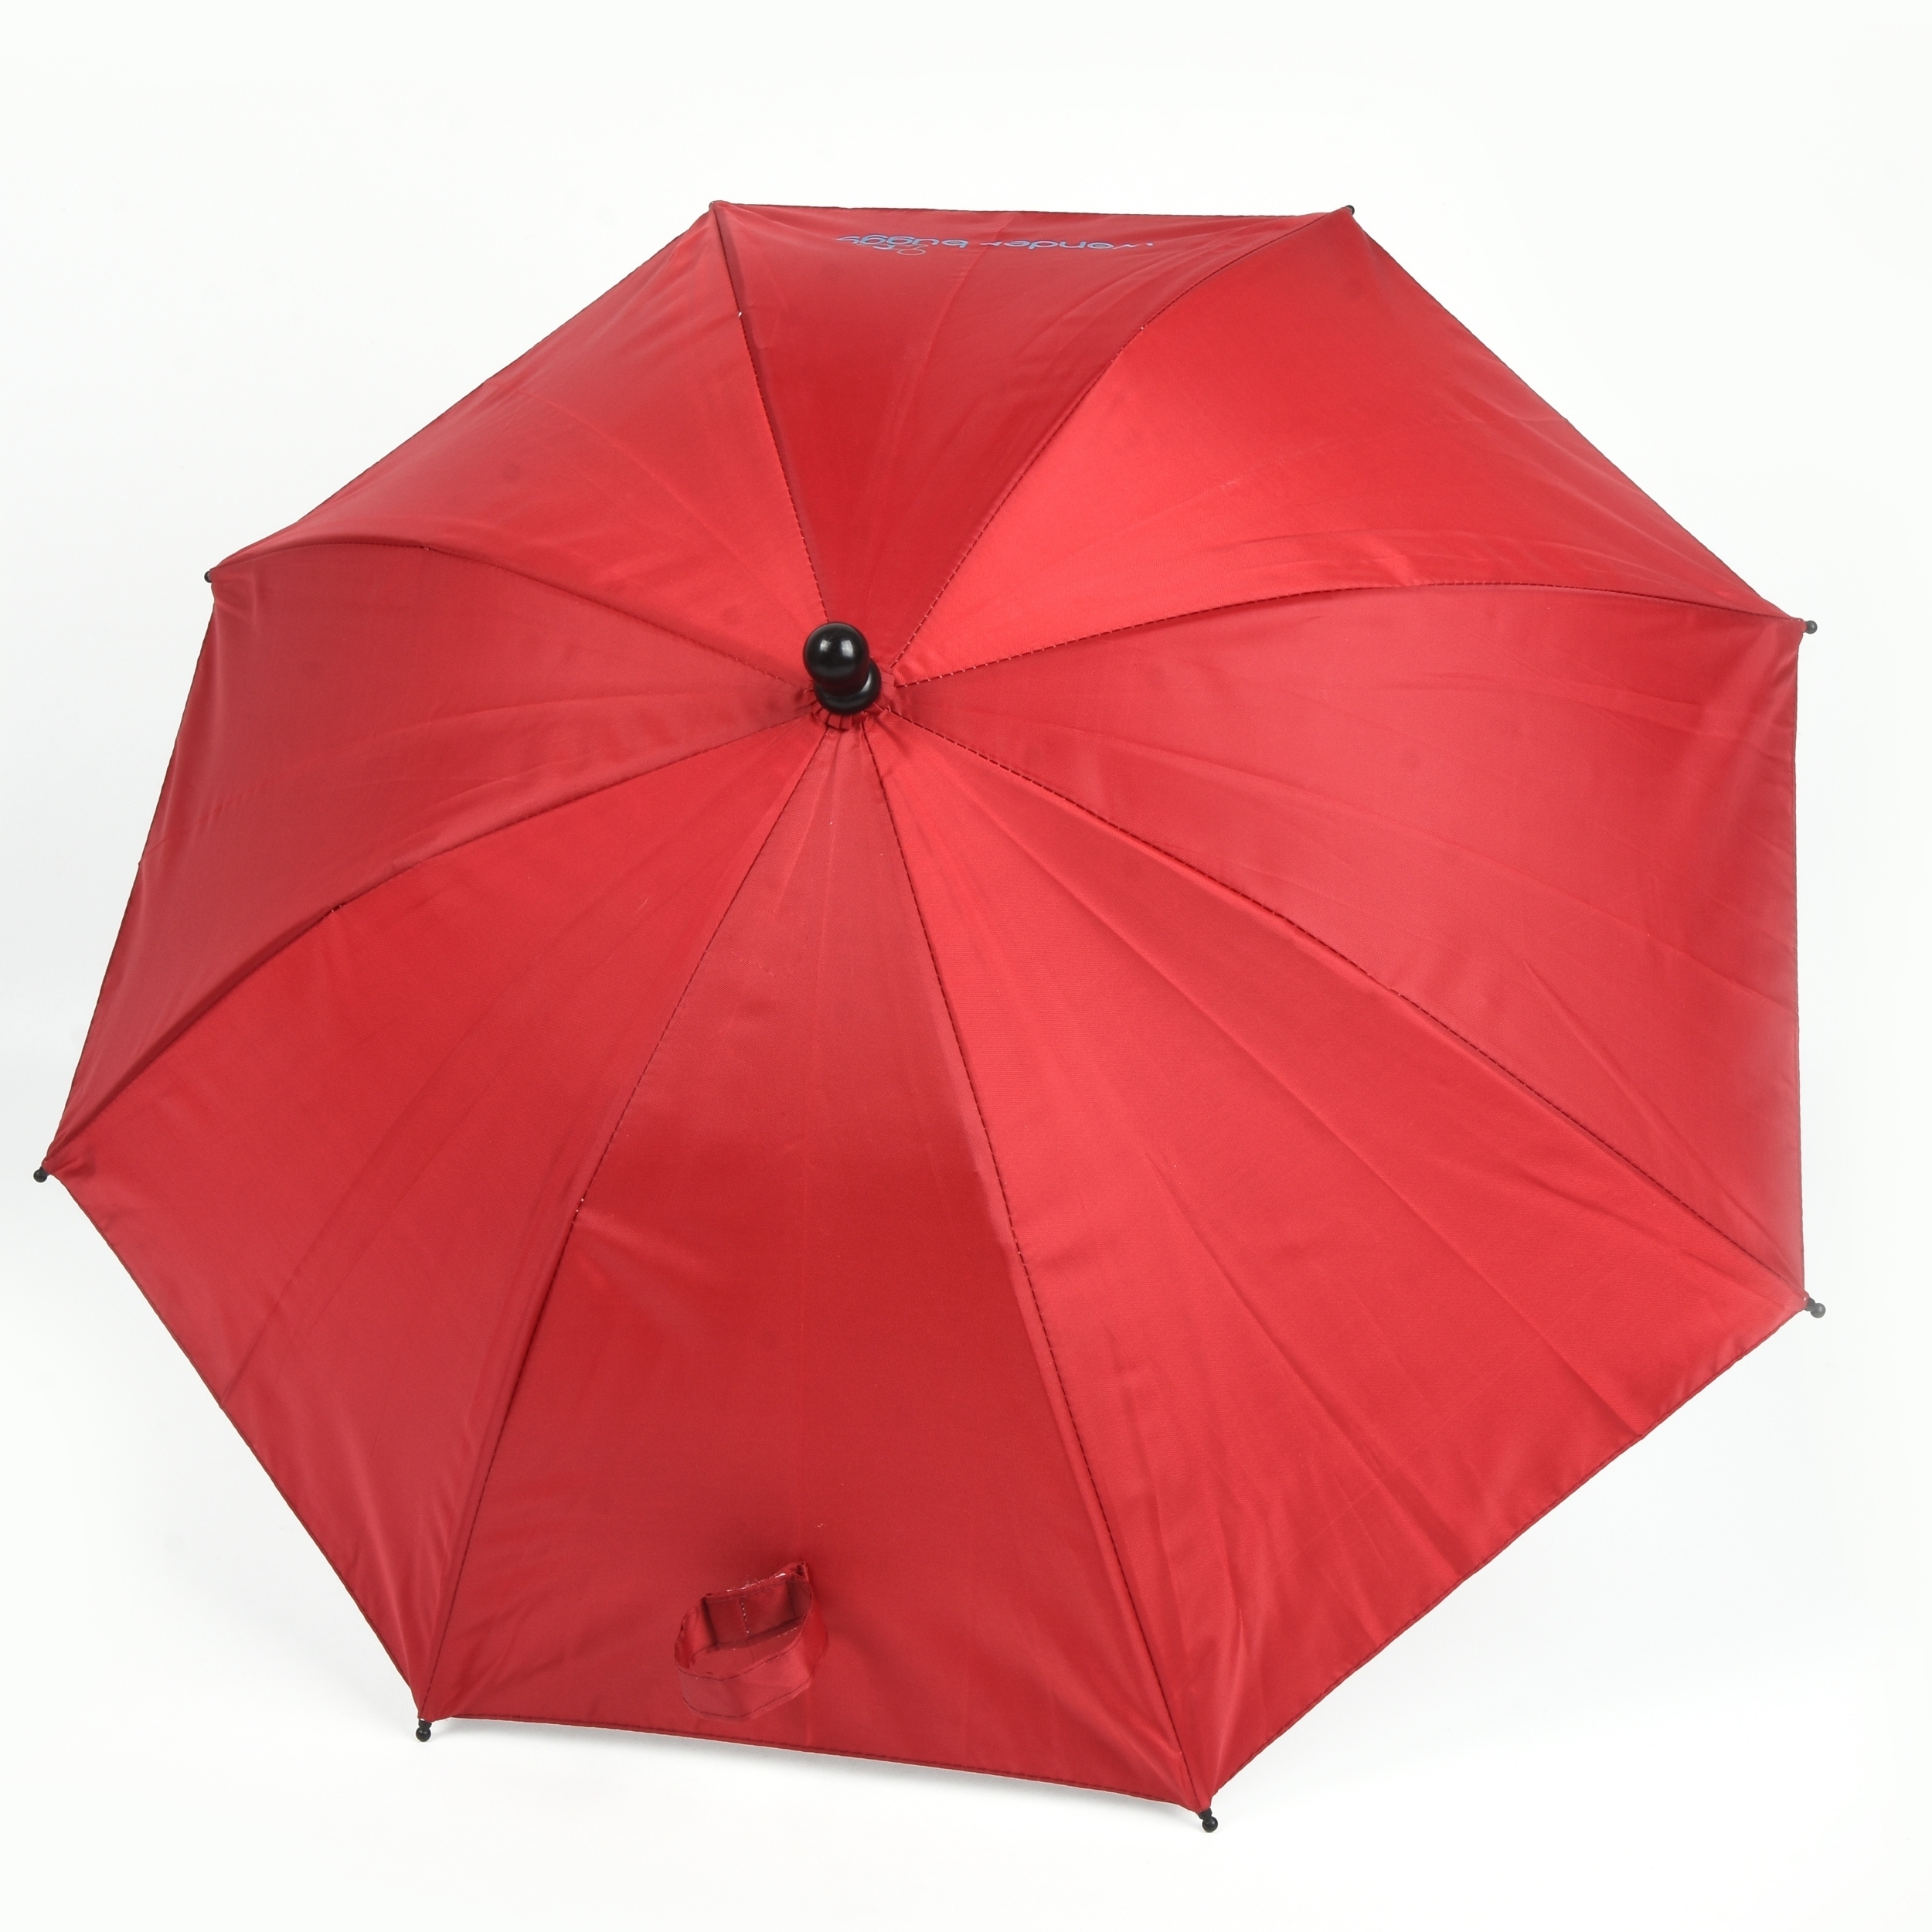 universal stroller parasol